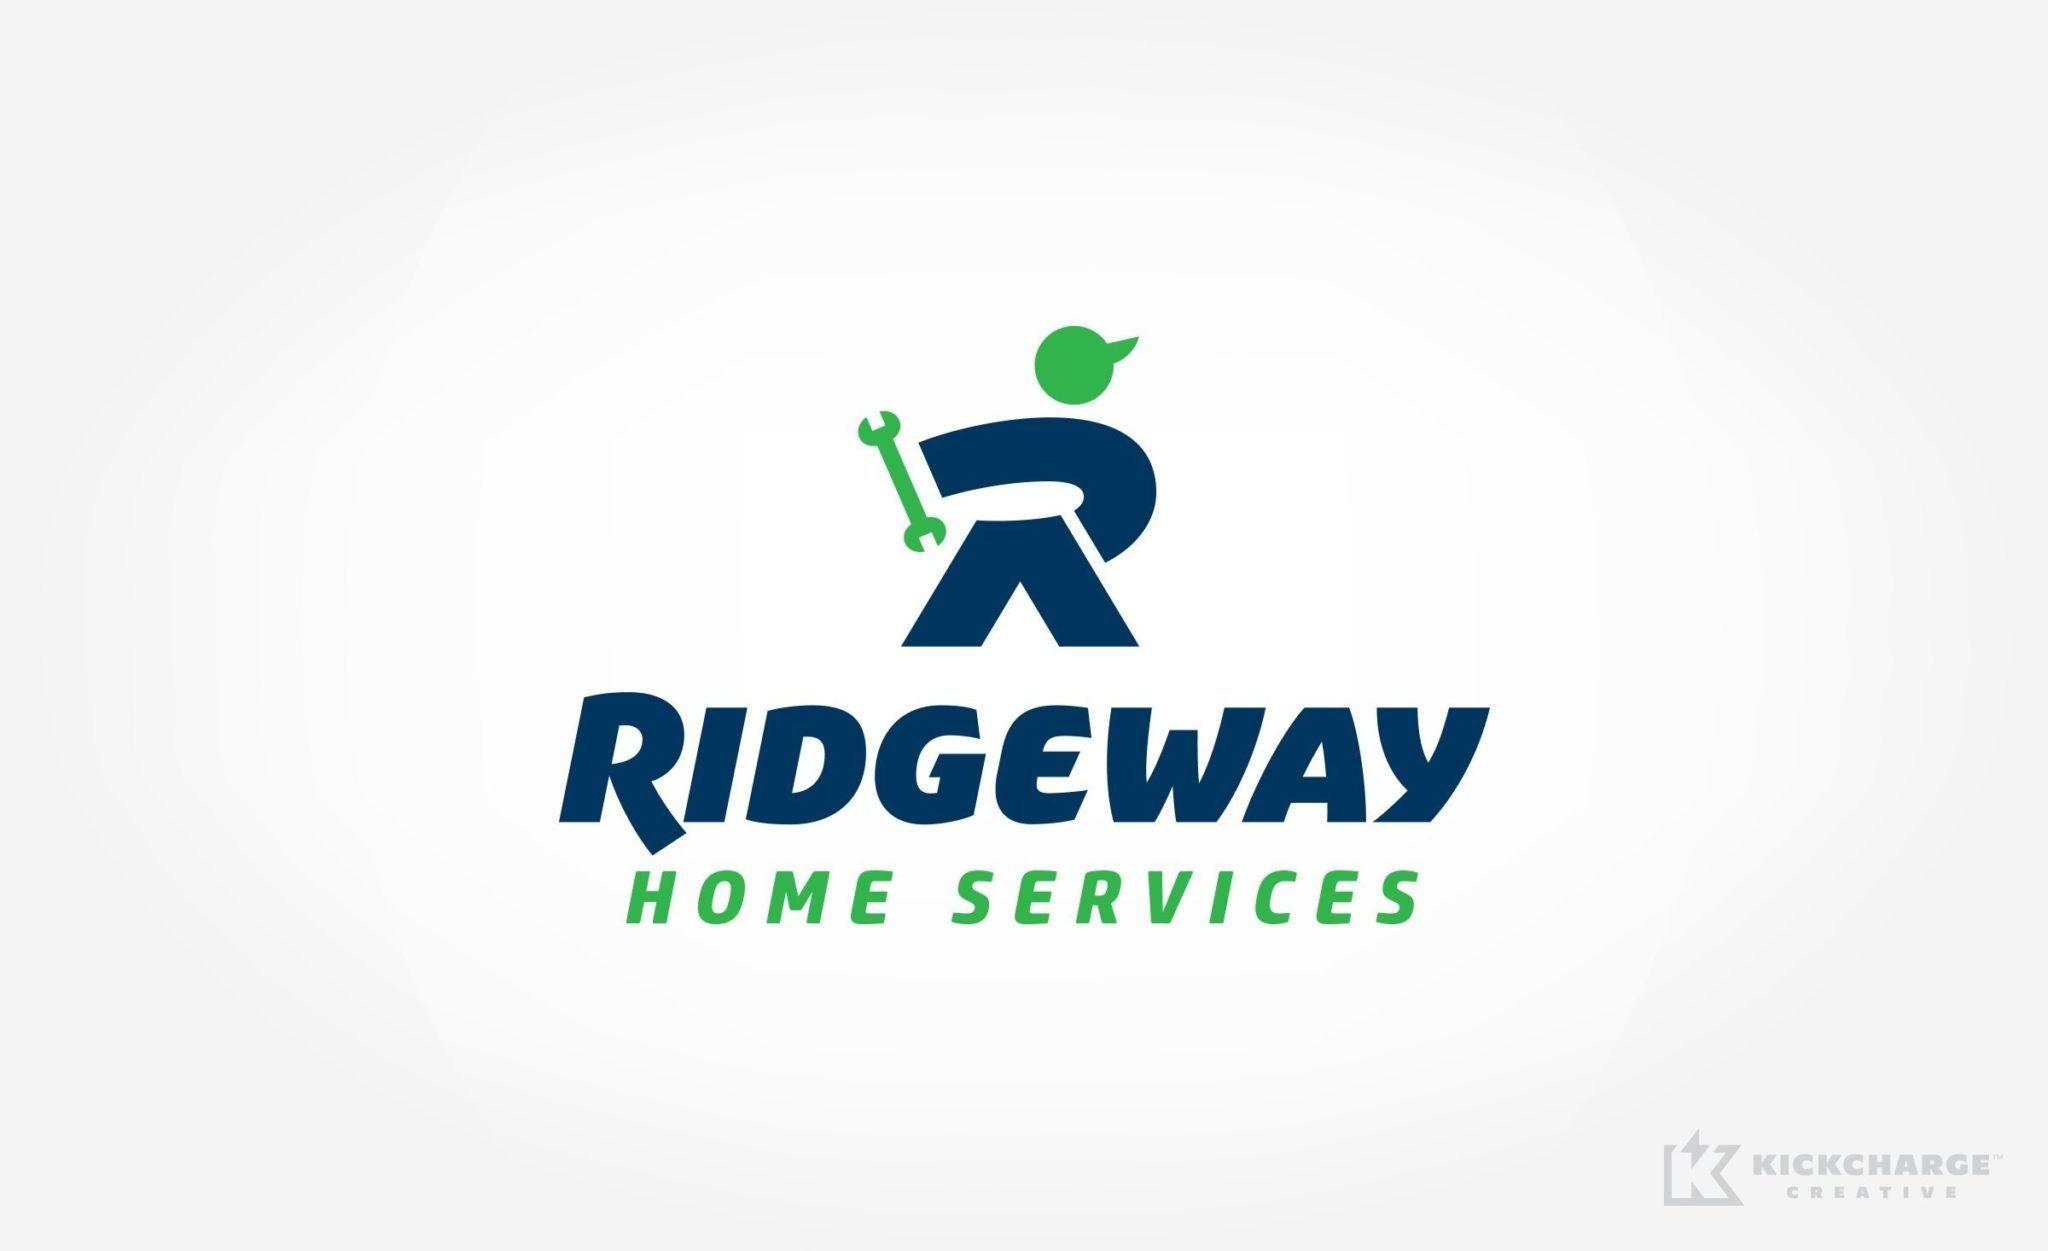 Services Logo - Ridgeway Home Services - KickCharge Creative | kickcharge.com ...